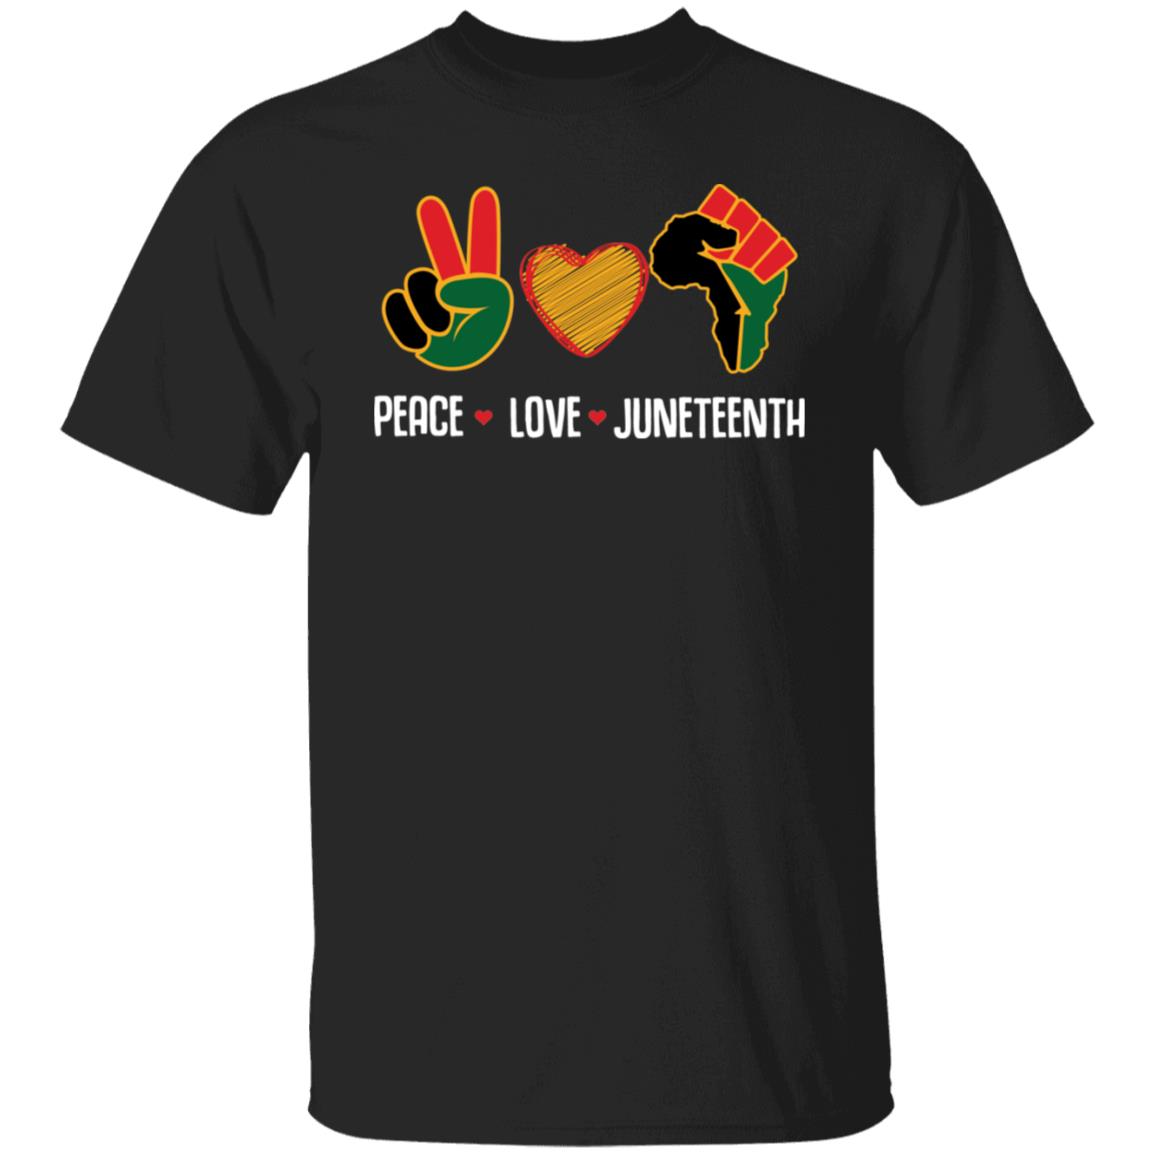 Peace Love Juneteenth T-shirt Apparel Gearment Unisex Tee Black S